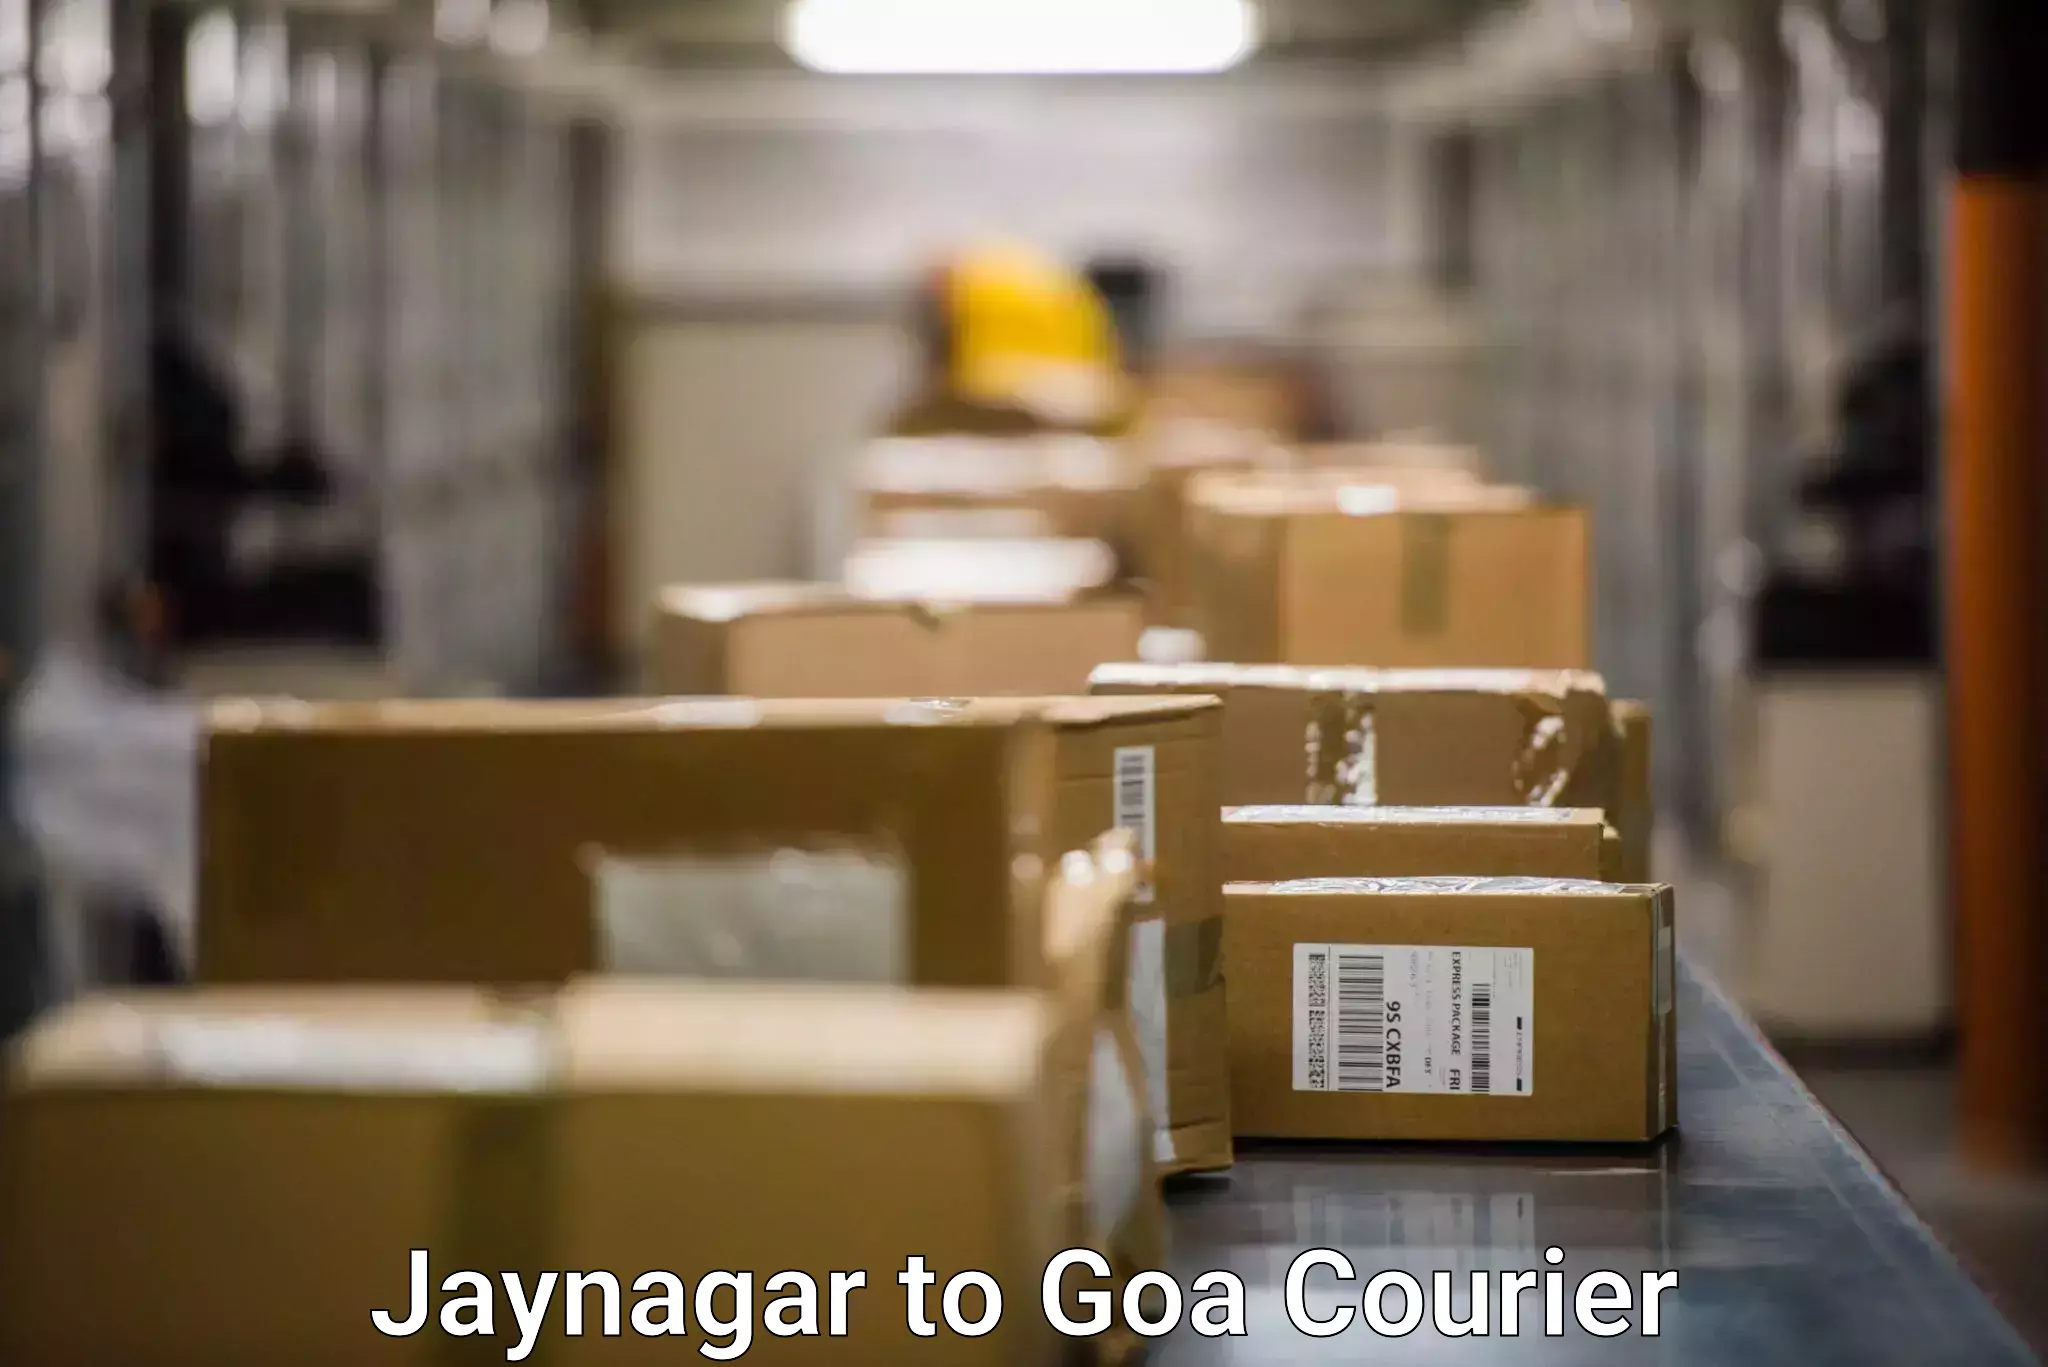 Courier service partnerships Jaynagar to Goa